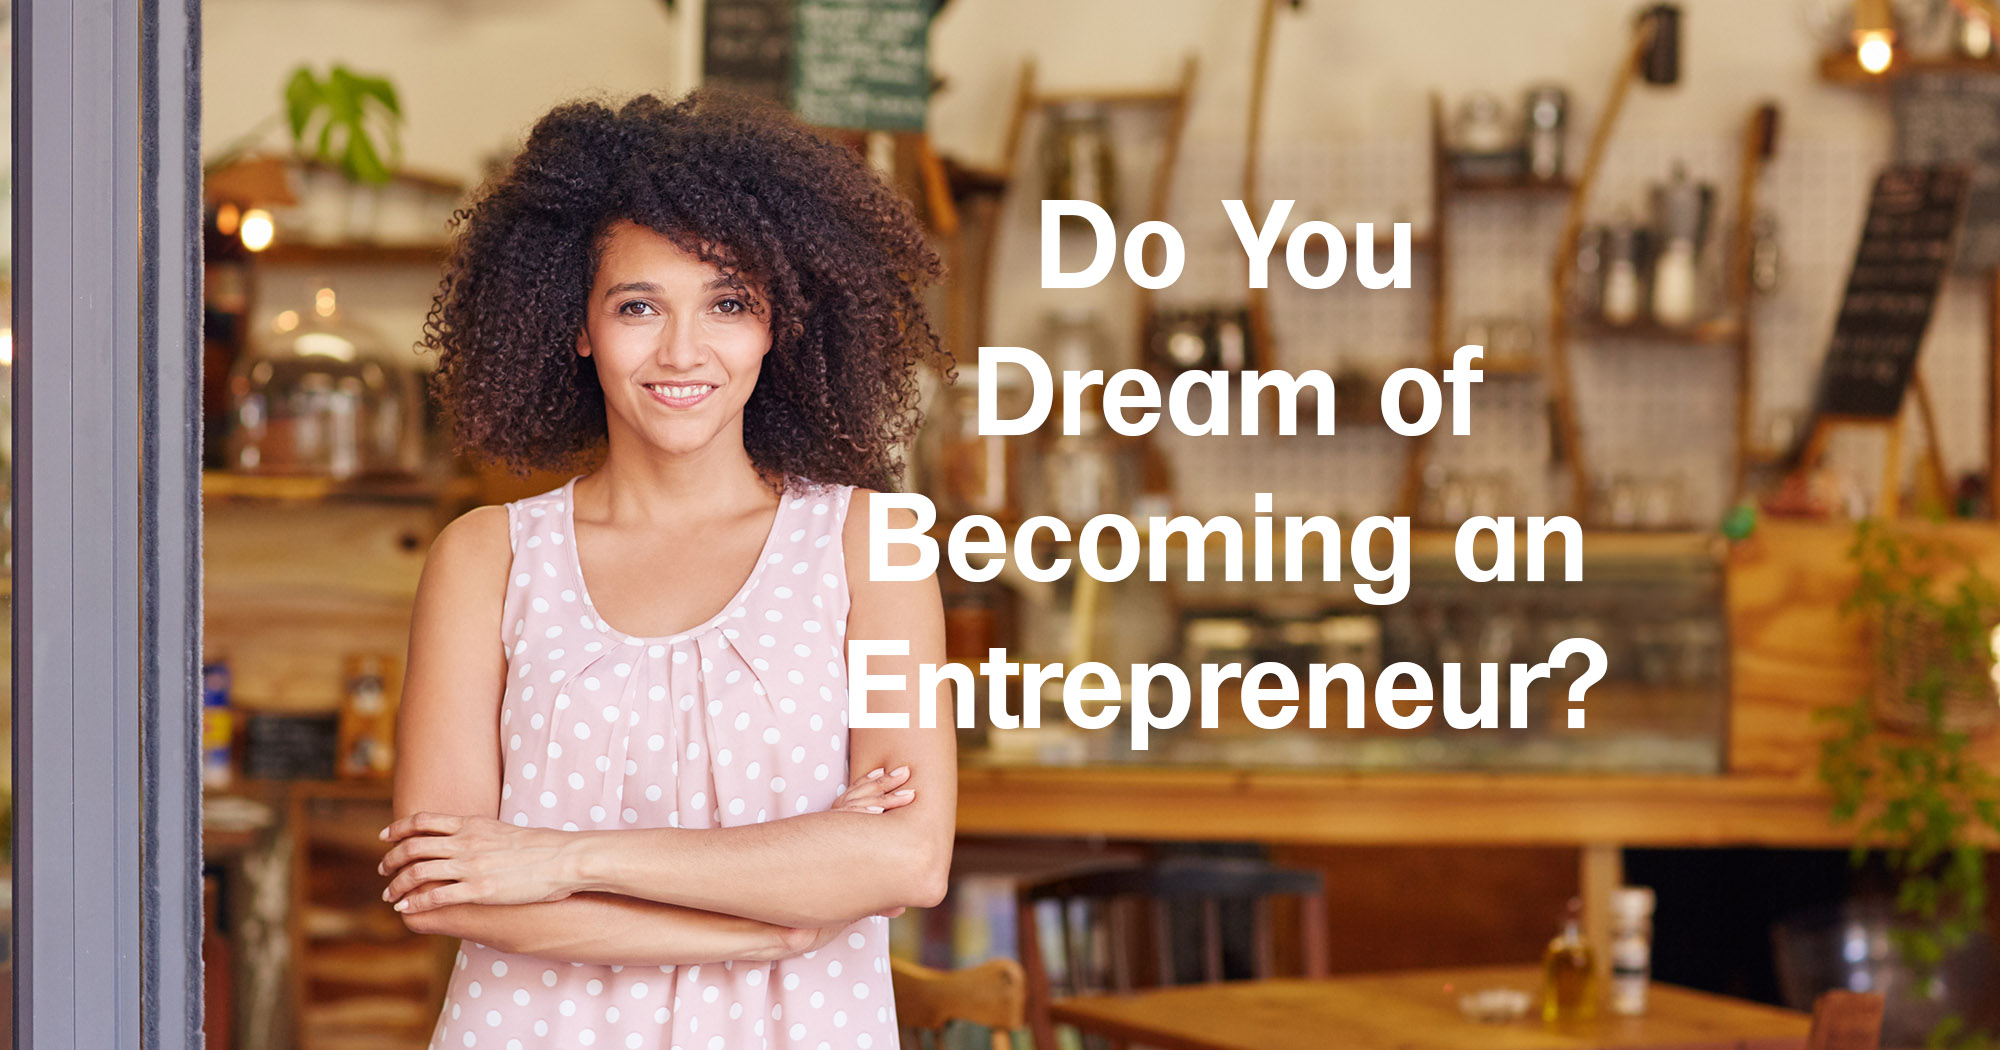 Do You Dream of Being an Entrepreneur